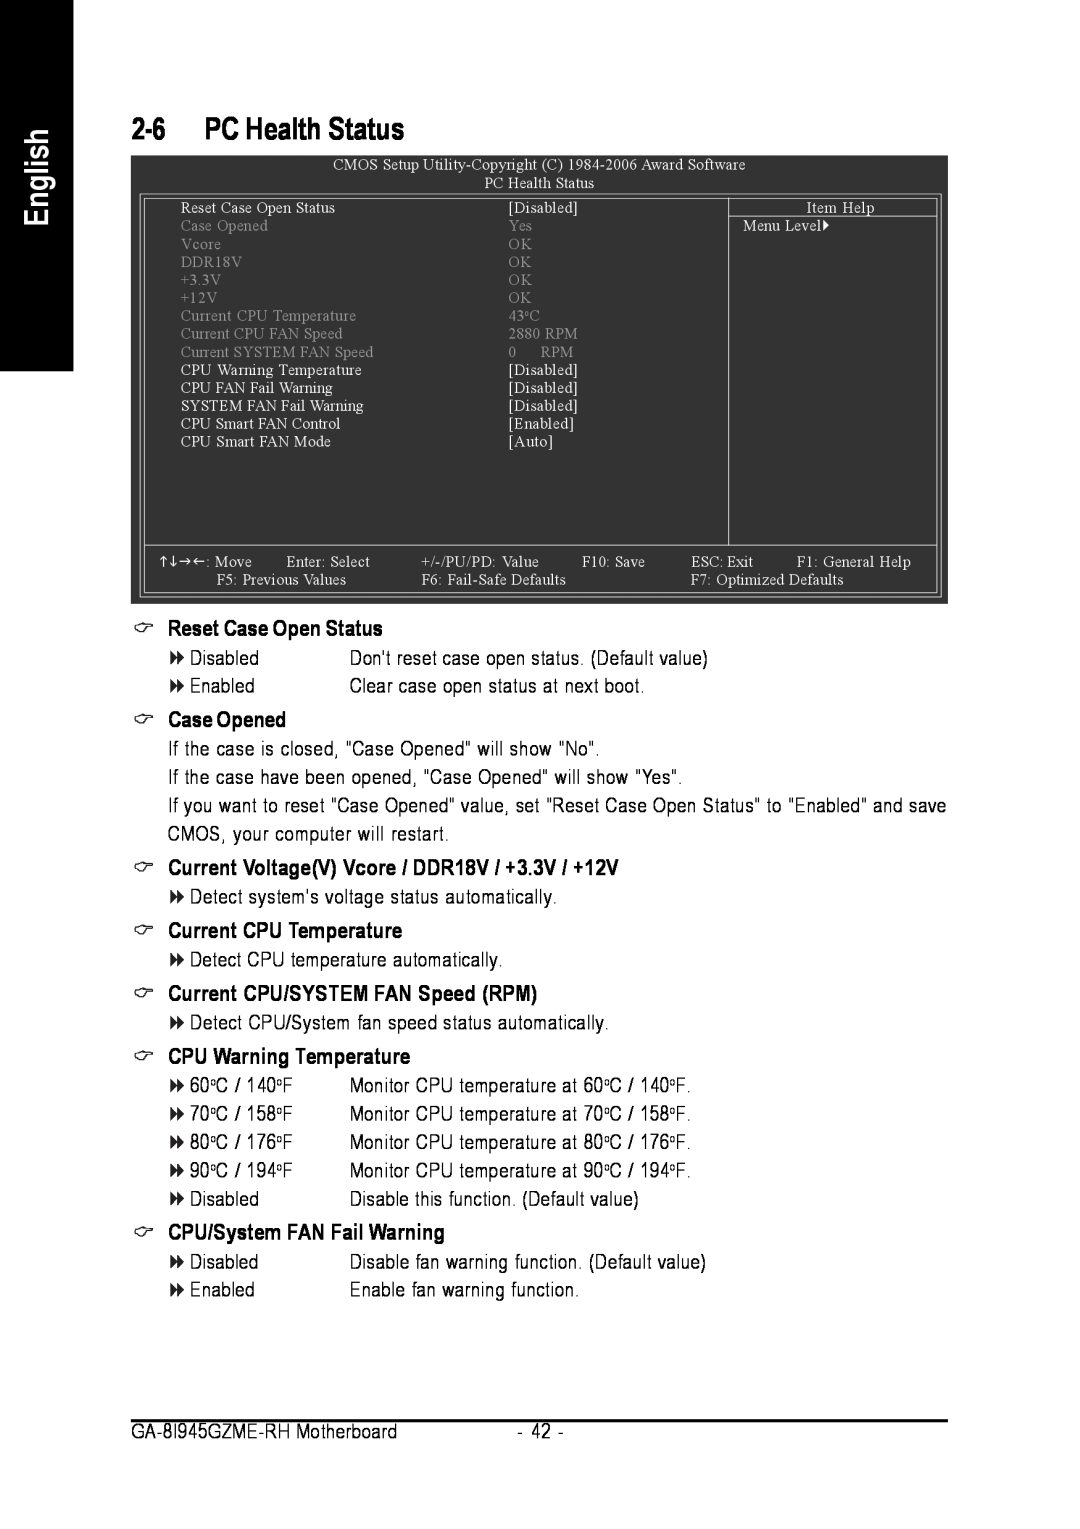 Intel GA-8I945GZME-RH user manual PC Health Status, Case Opened, Current VoltageV Vcore / DDR18V / +3.3V / +12V, English 